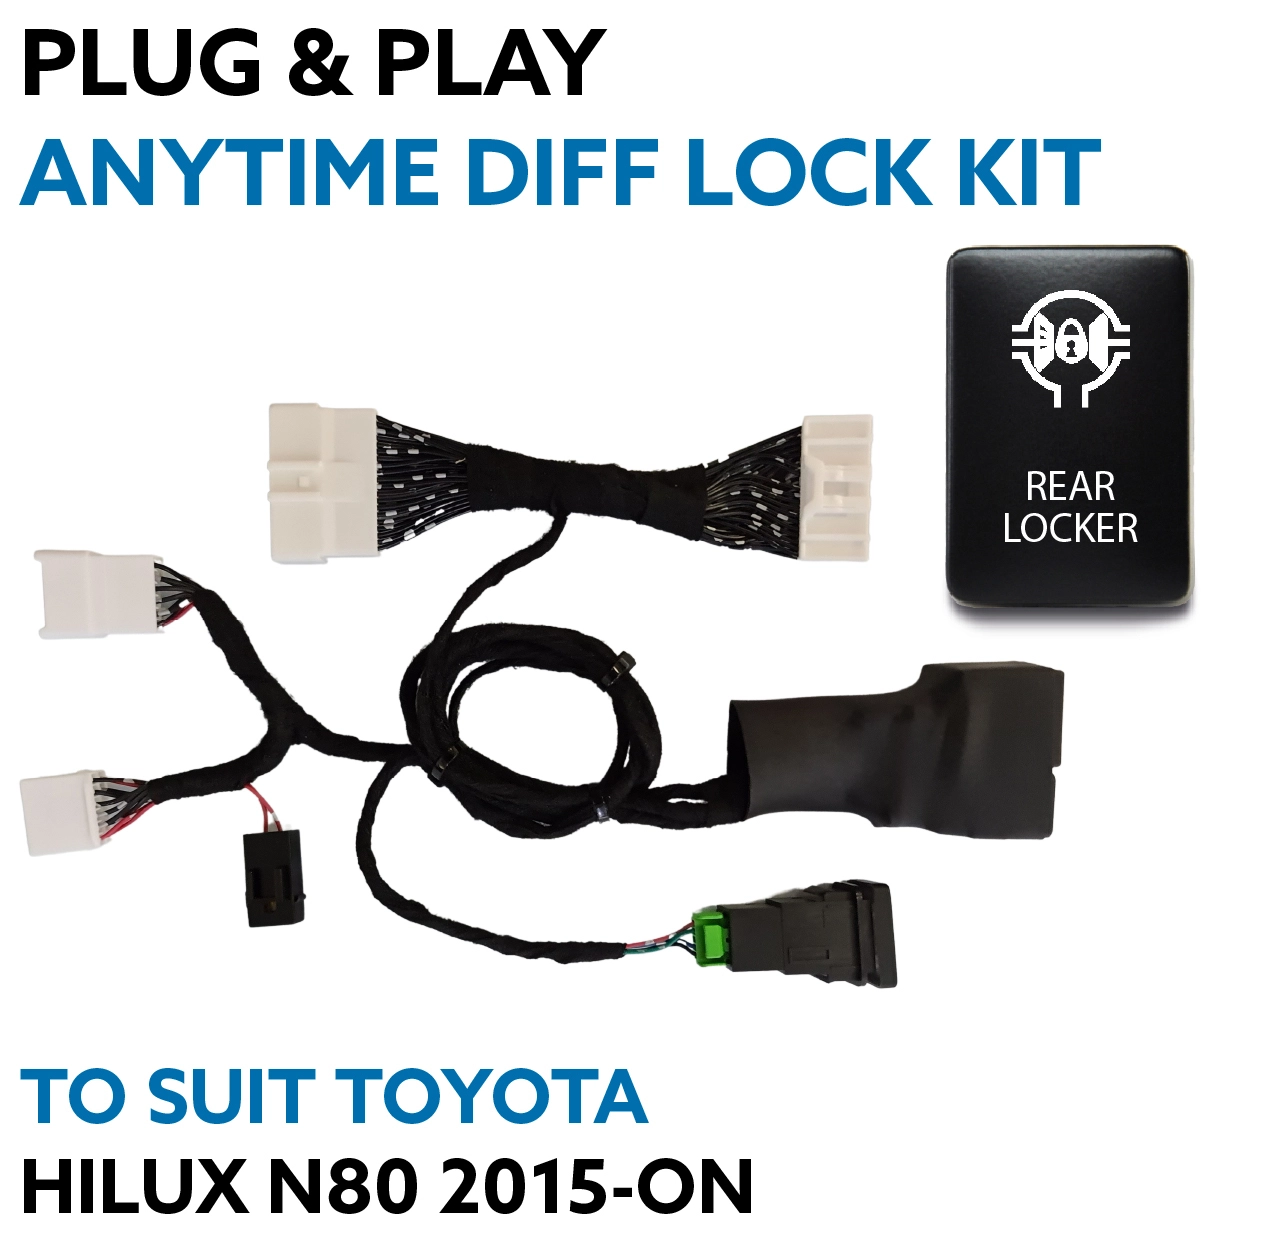 Toyota Hilux N80 Plug & Play Anytime Diff Lock Kit